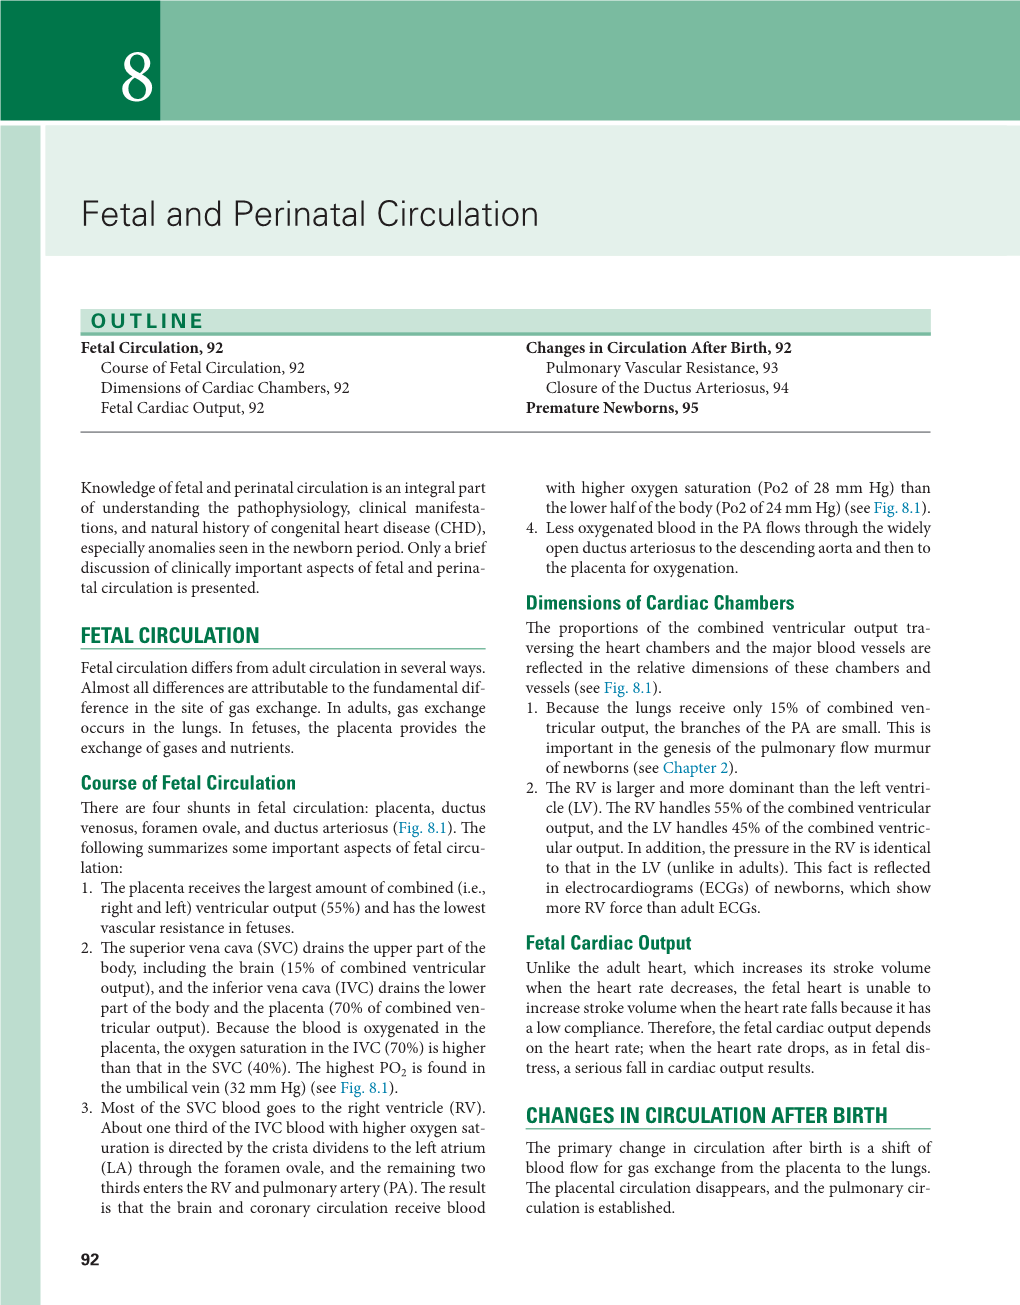 8 – Fetal and Perinatal Circulation